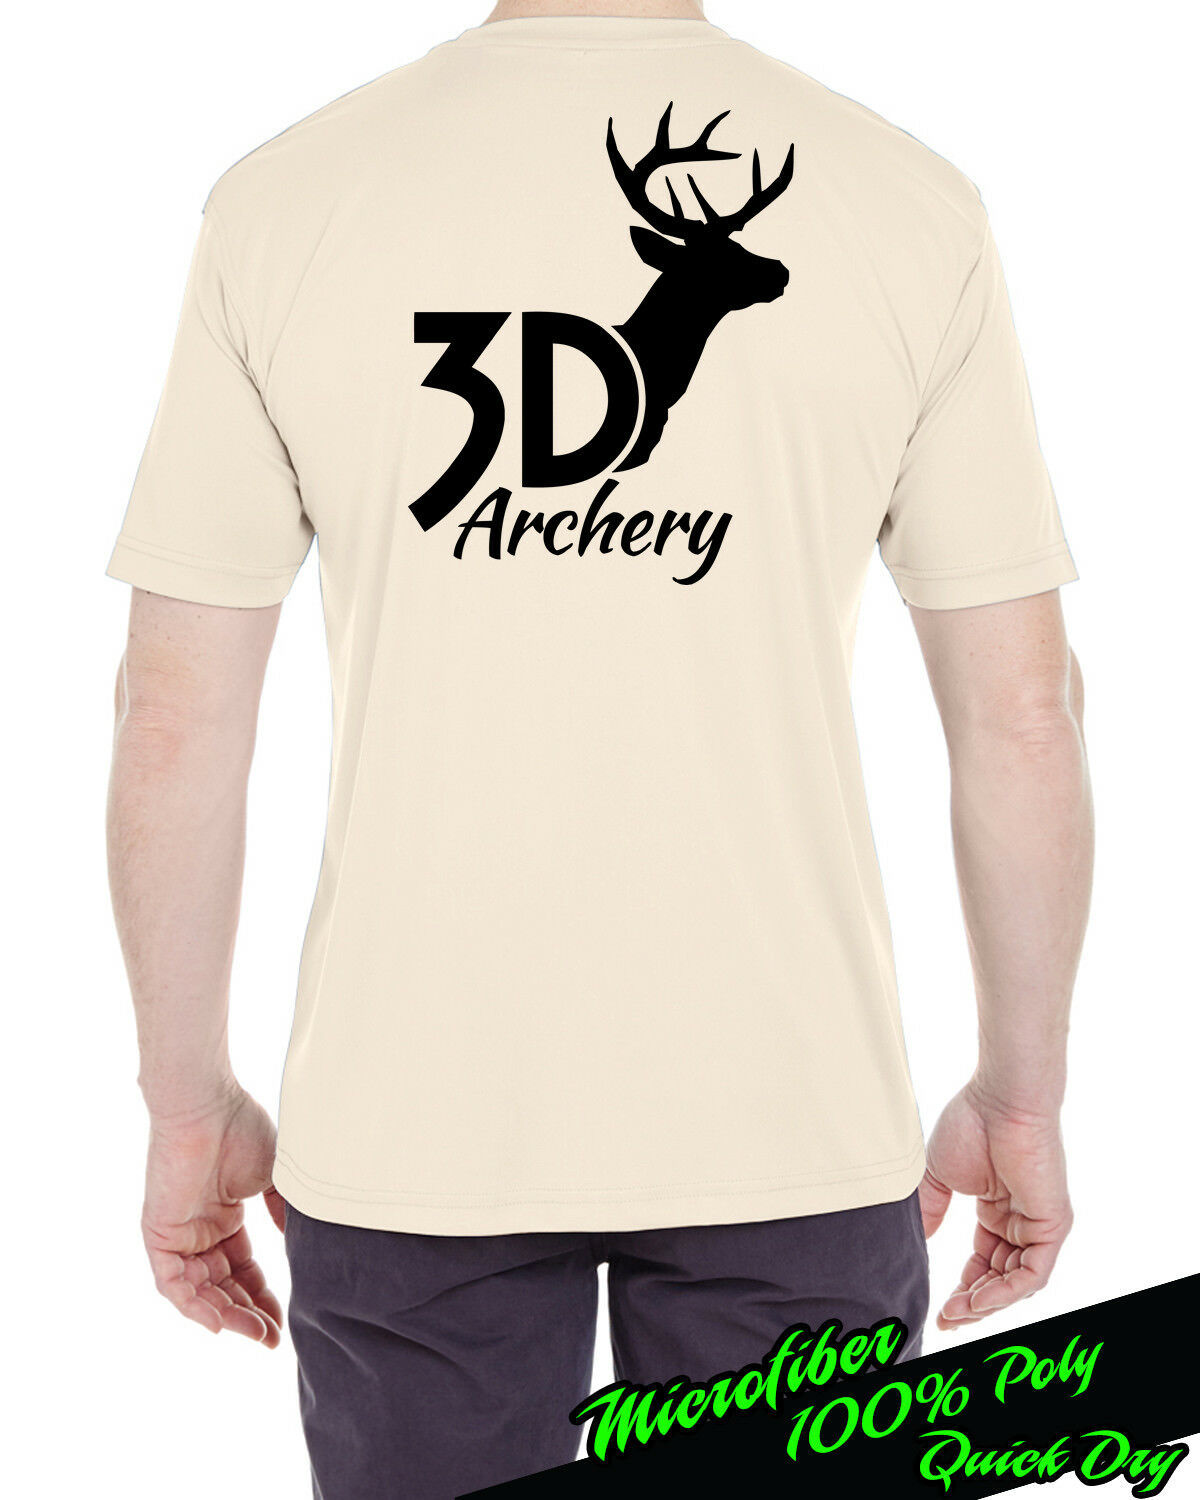 3D Archery Bowhunting bowhunter Microfiber Performance T-shirt buck deer poly